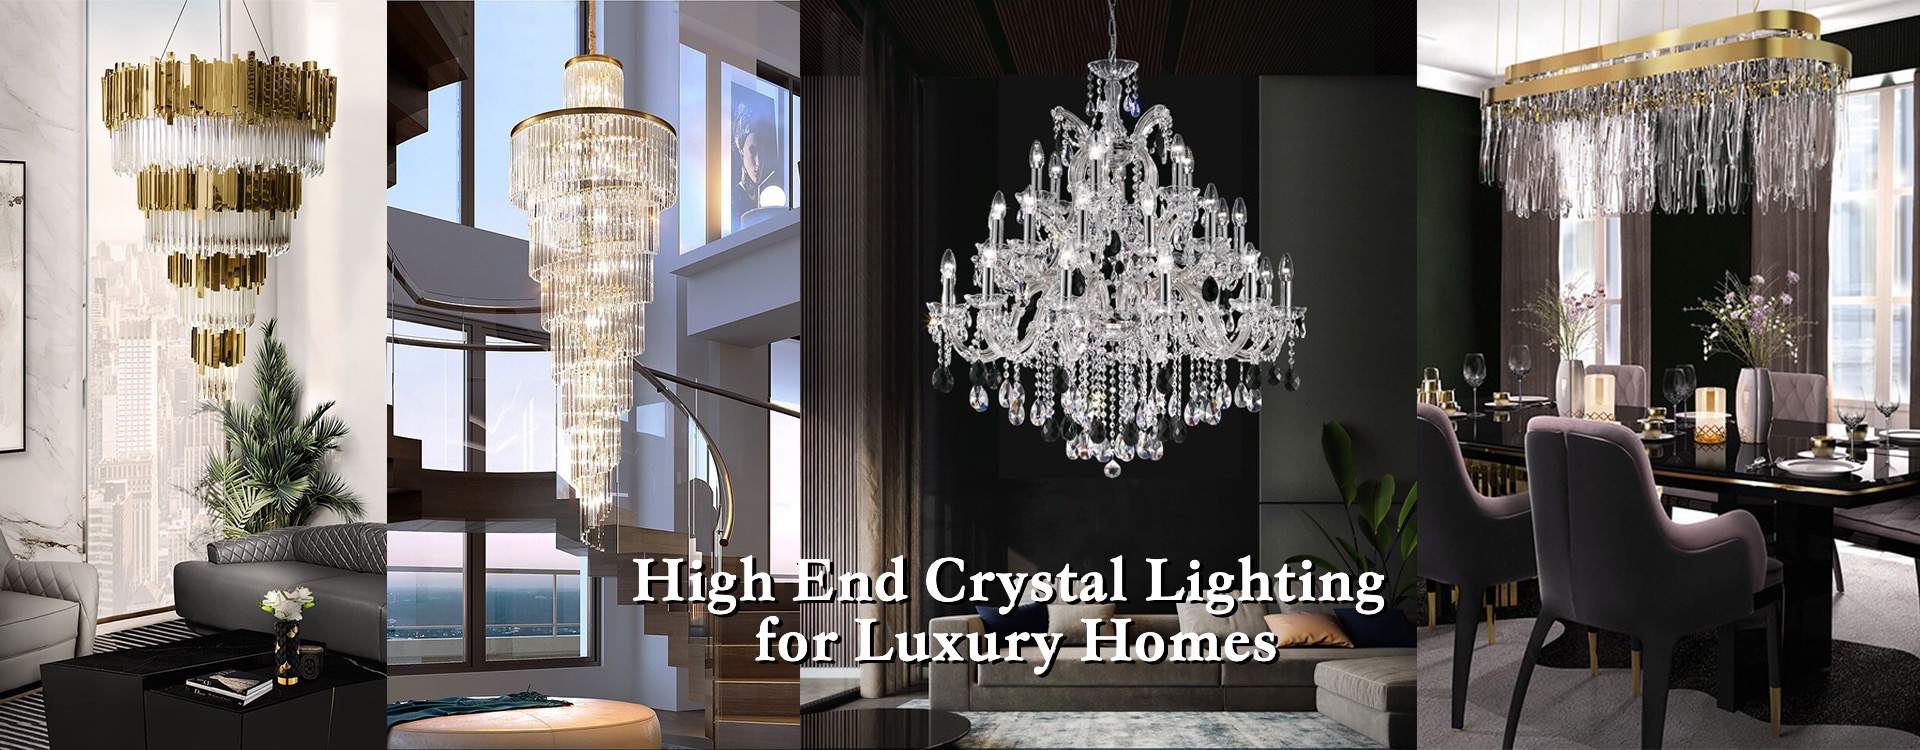 Висококачествено кристално осветление за луксозни домове